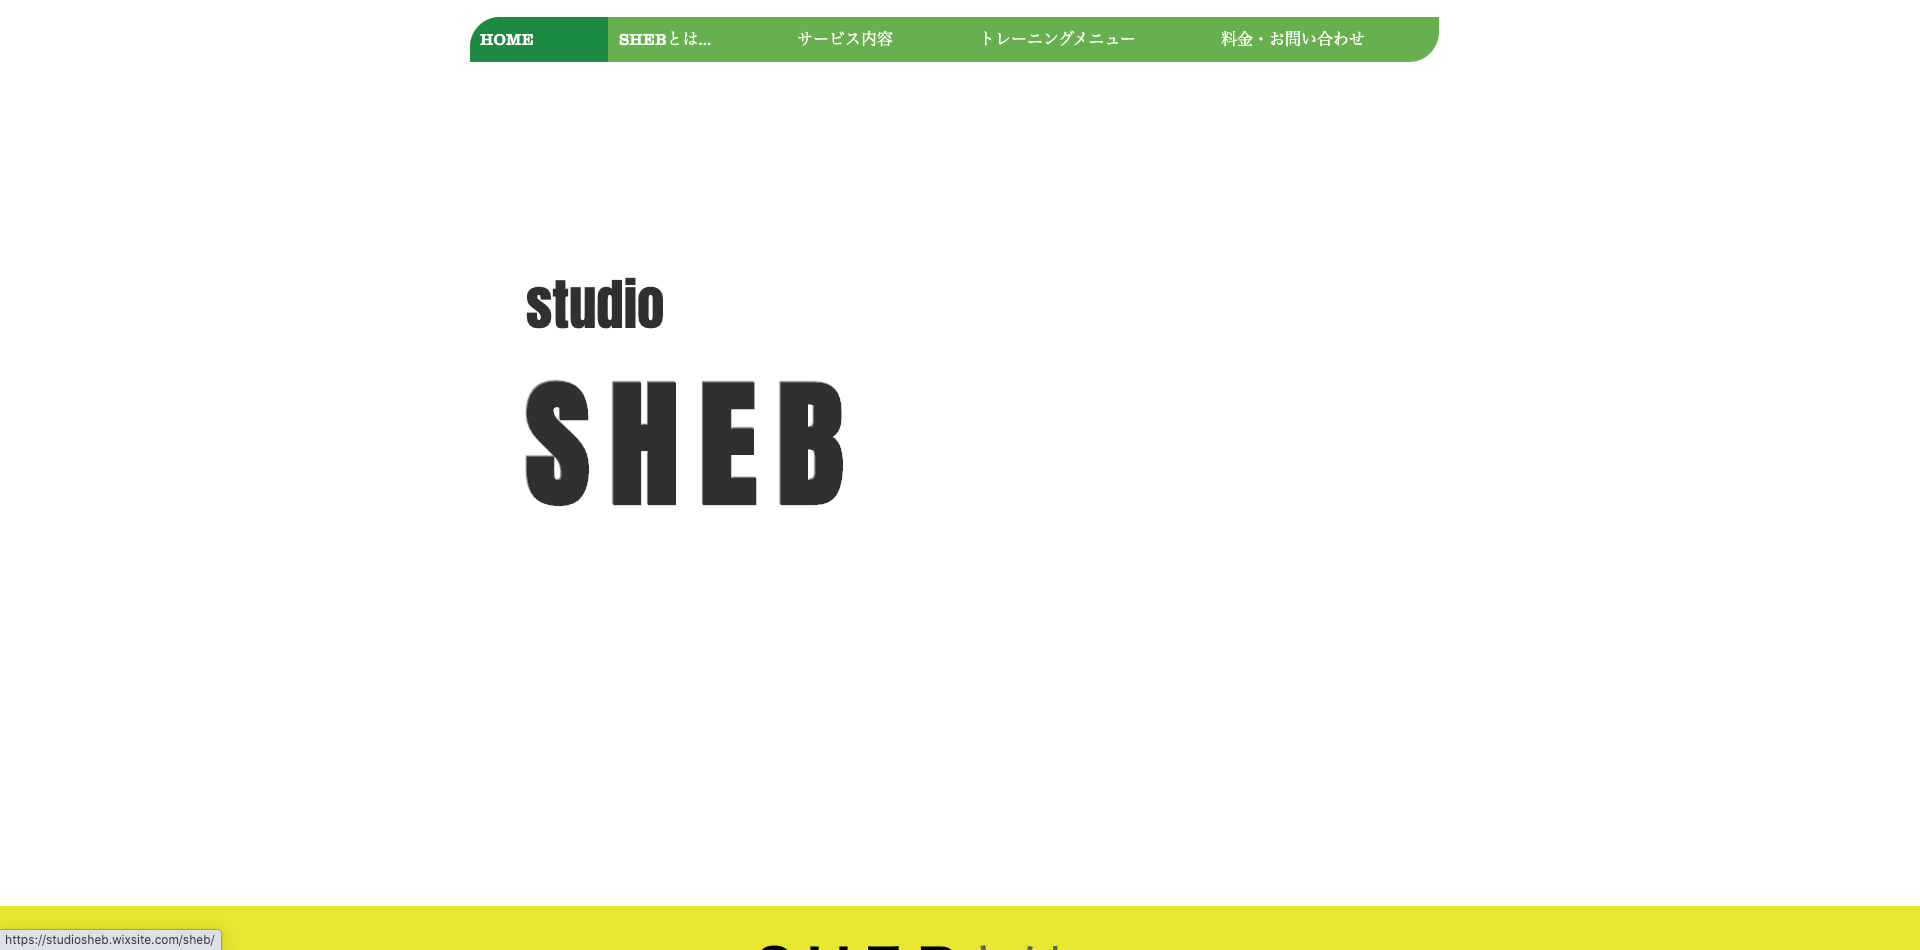 studioSHEB スタジオシェブ